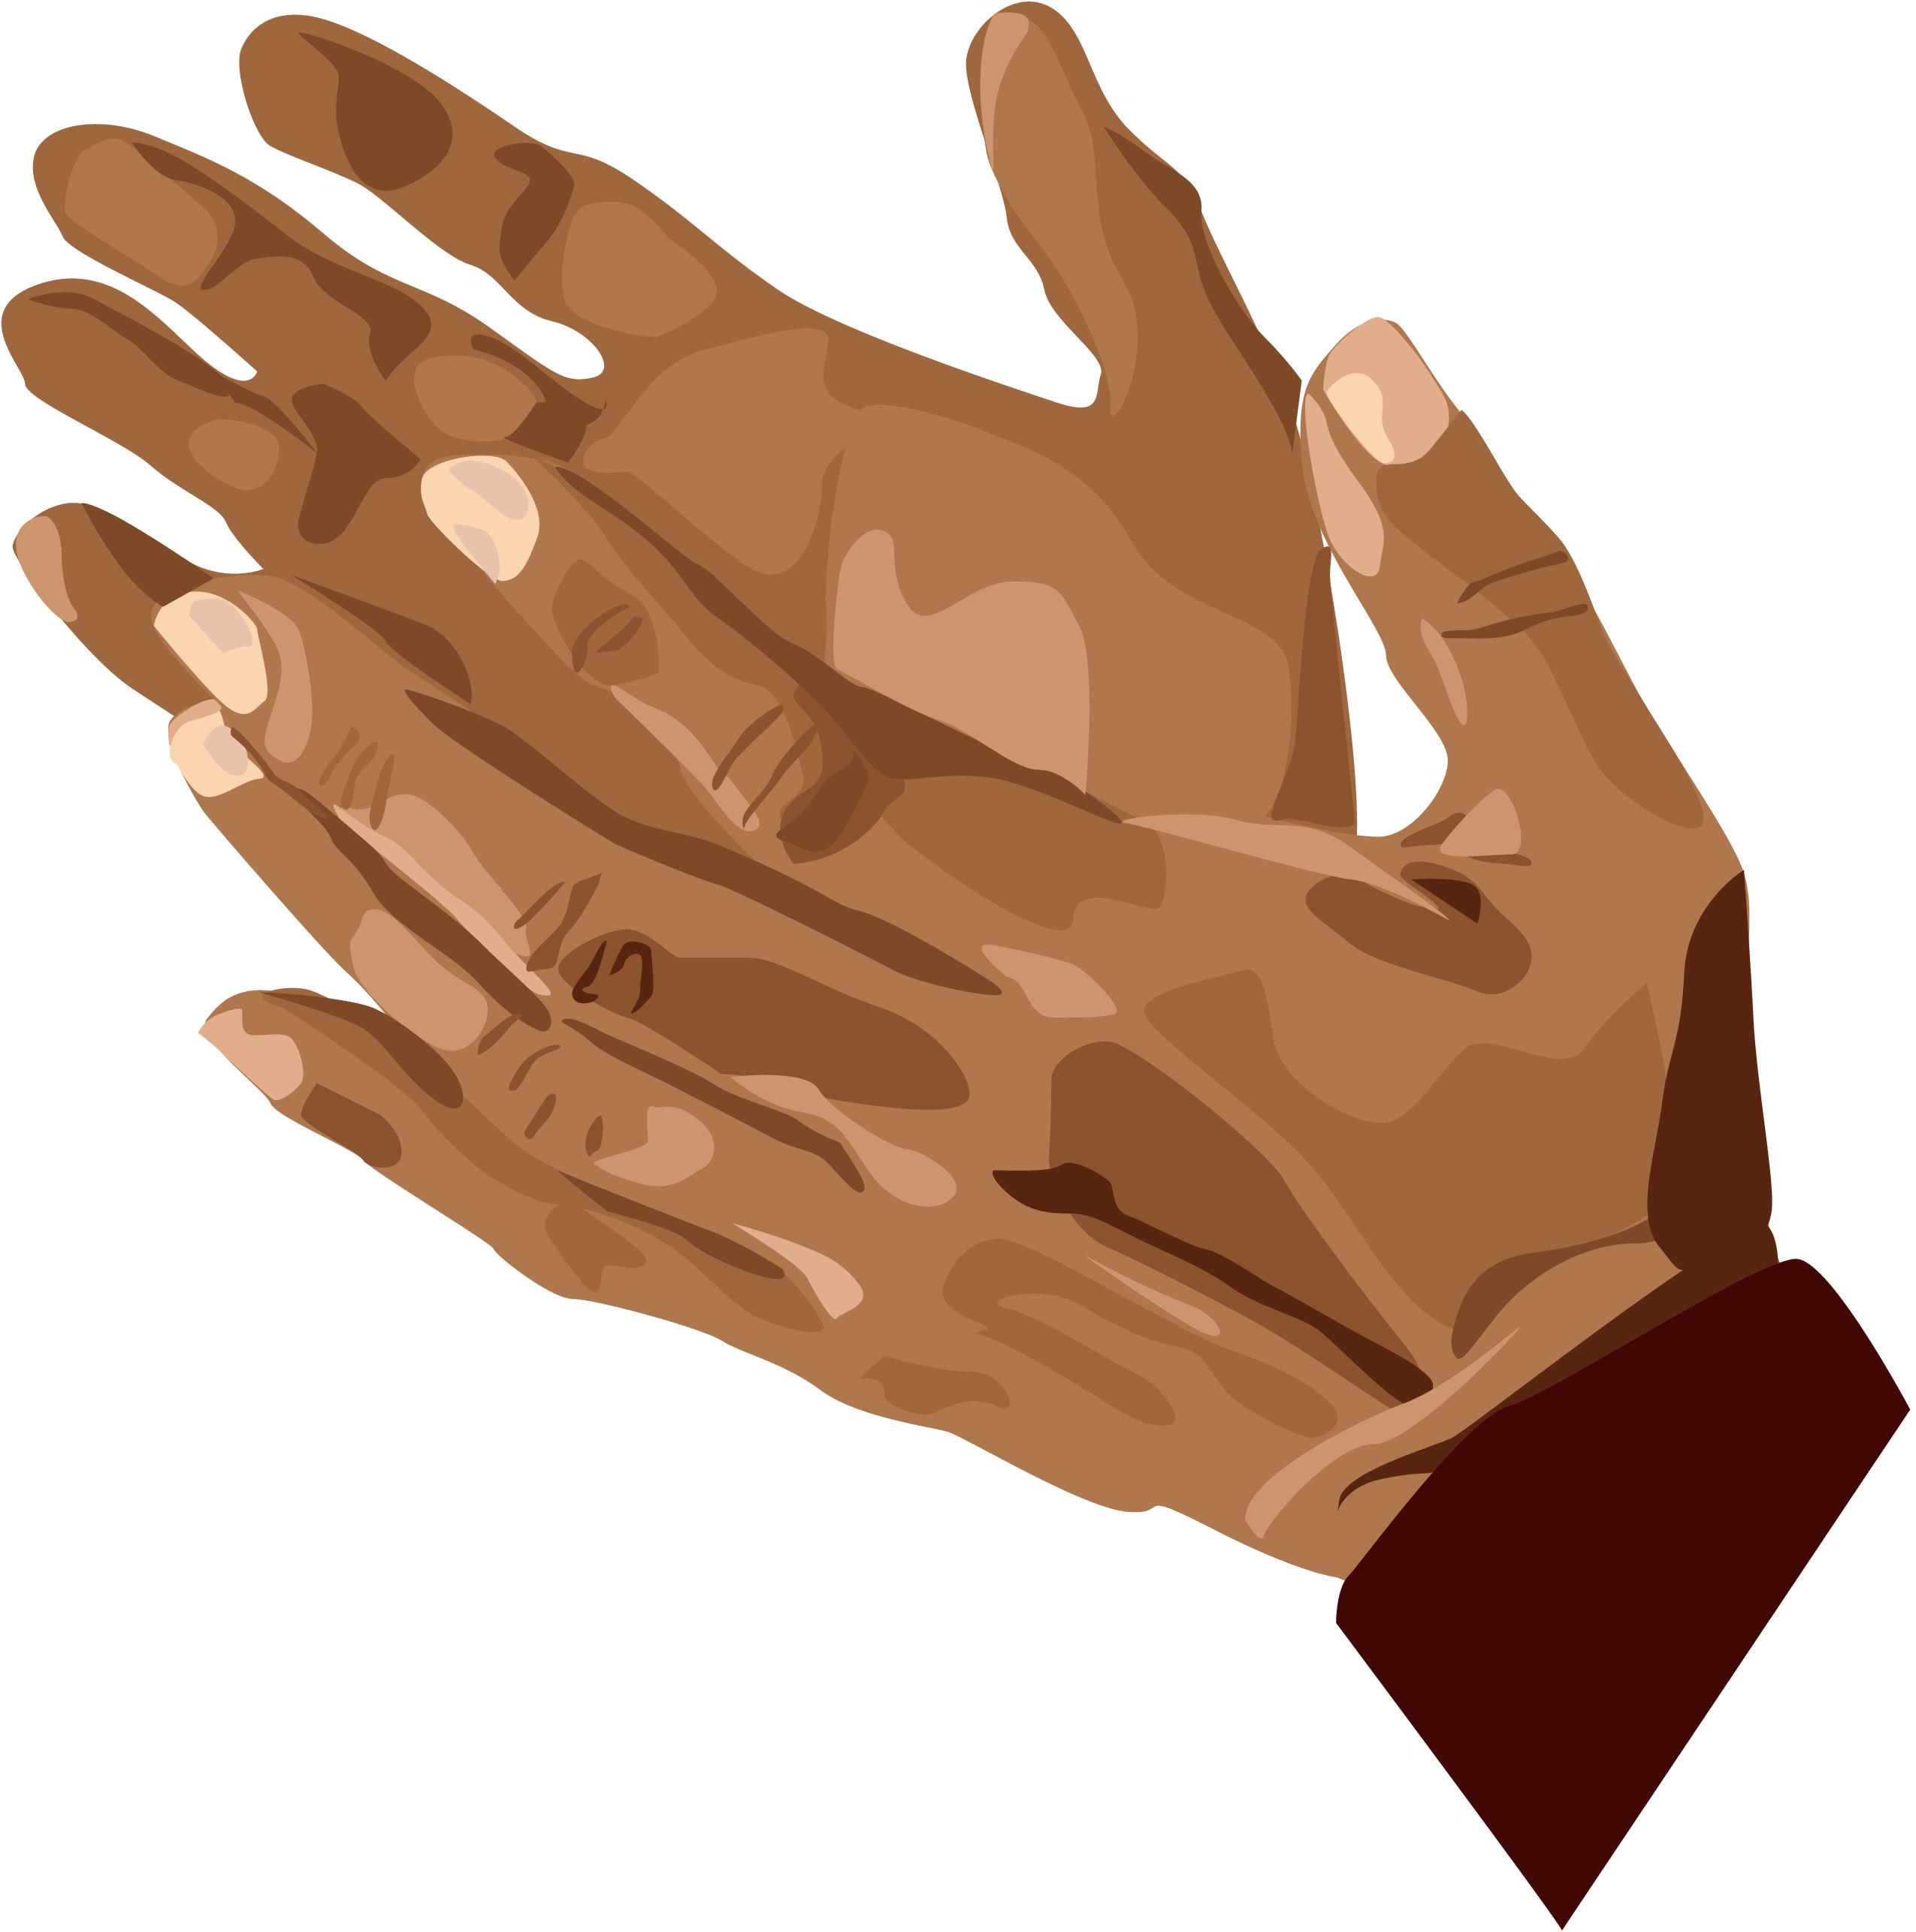 Pix For > Serving Hands Clip Art